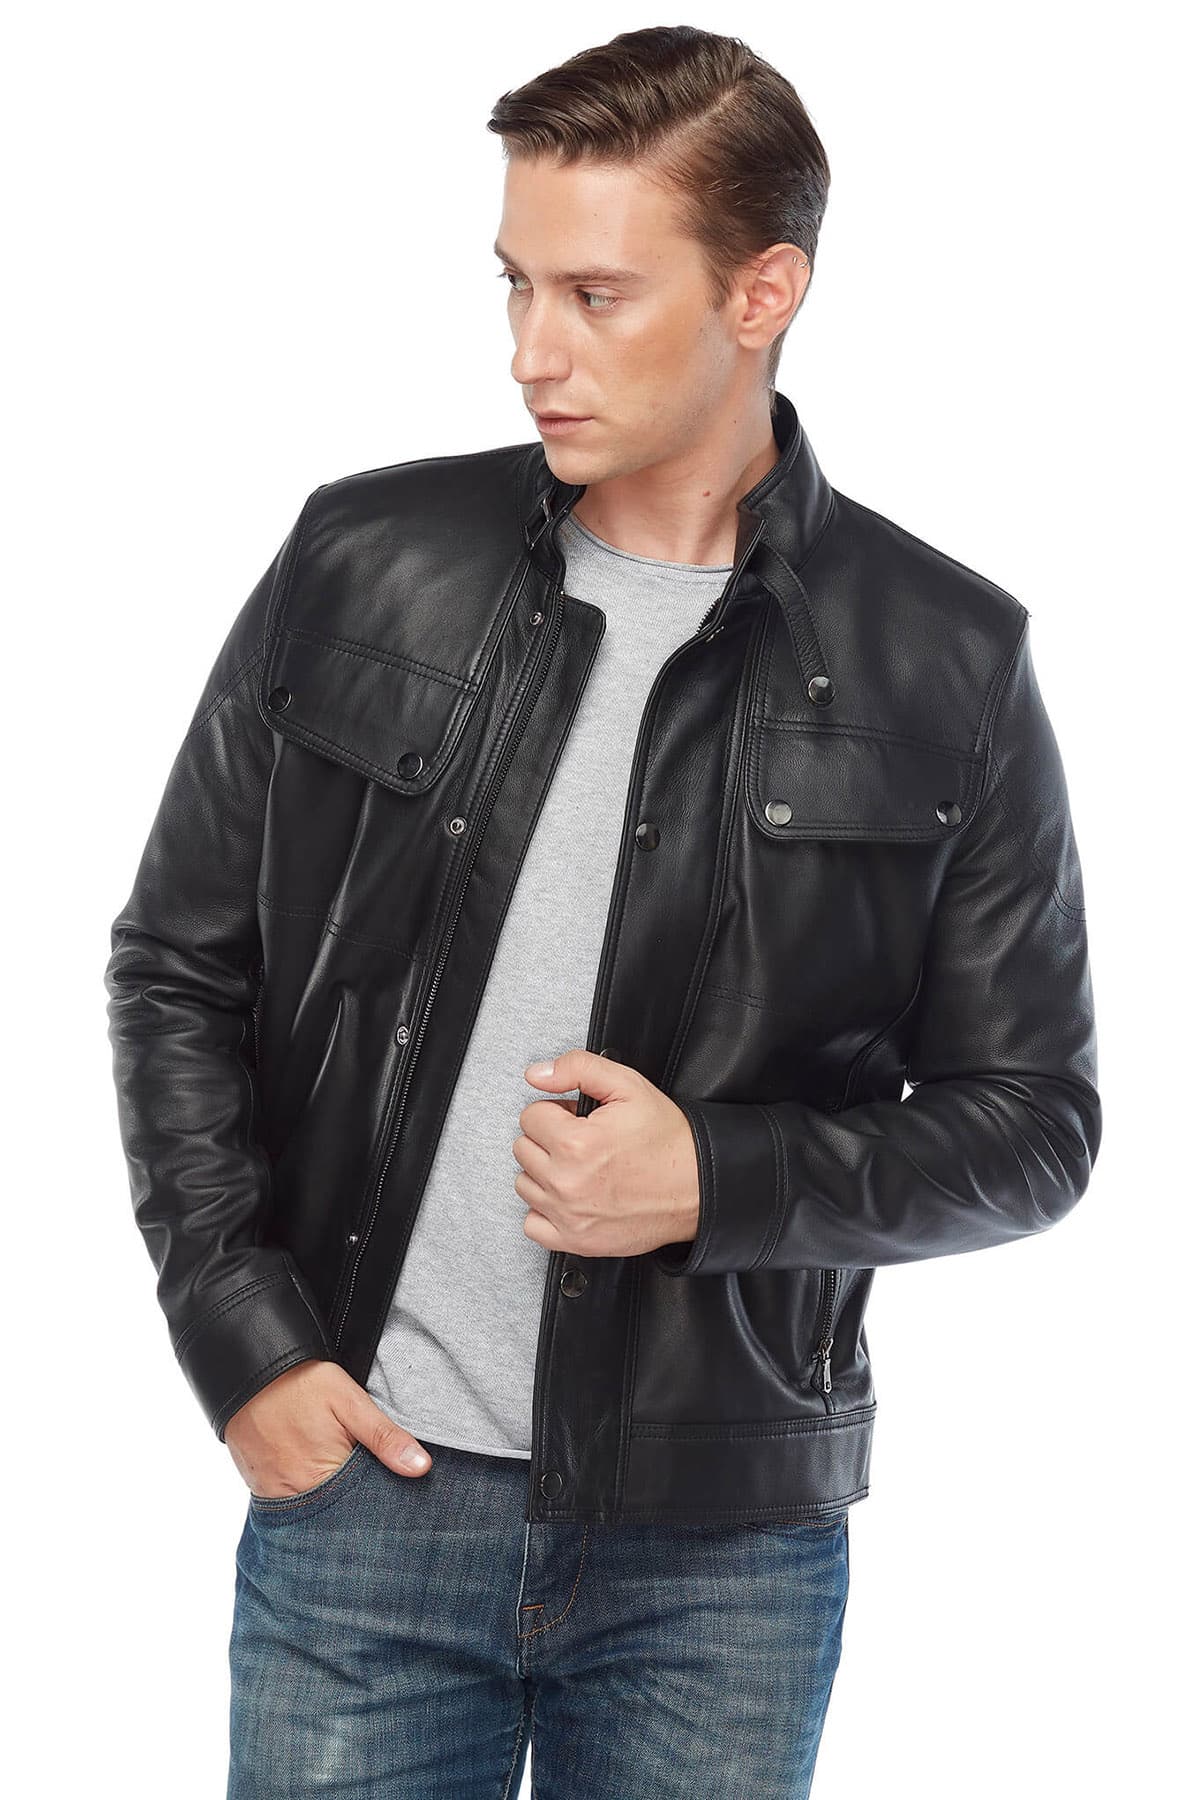 David Beckham Genuine Leather Coat Black Pose